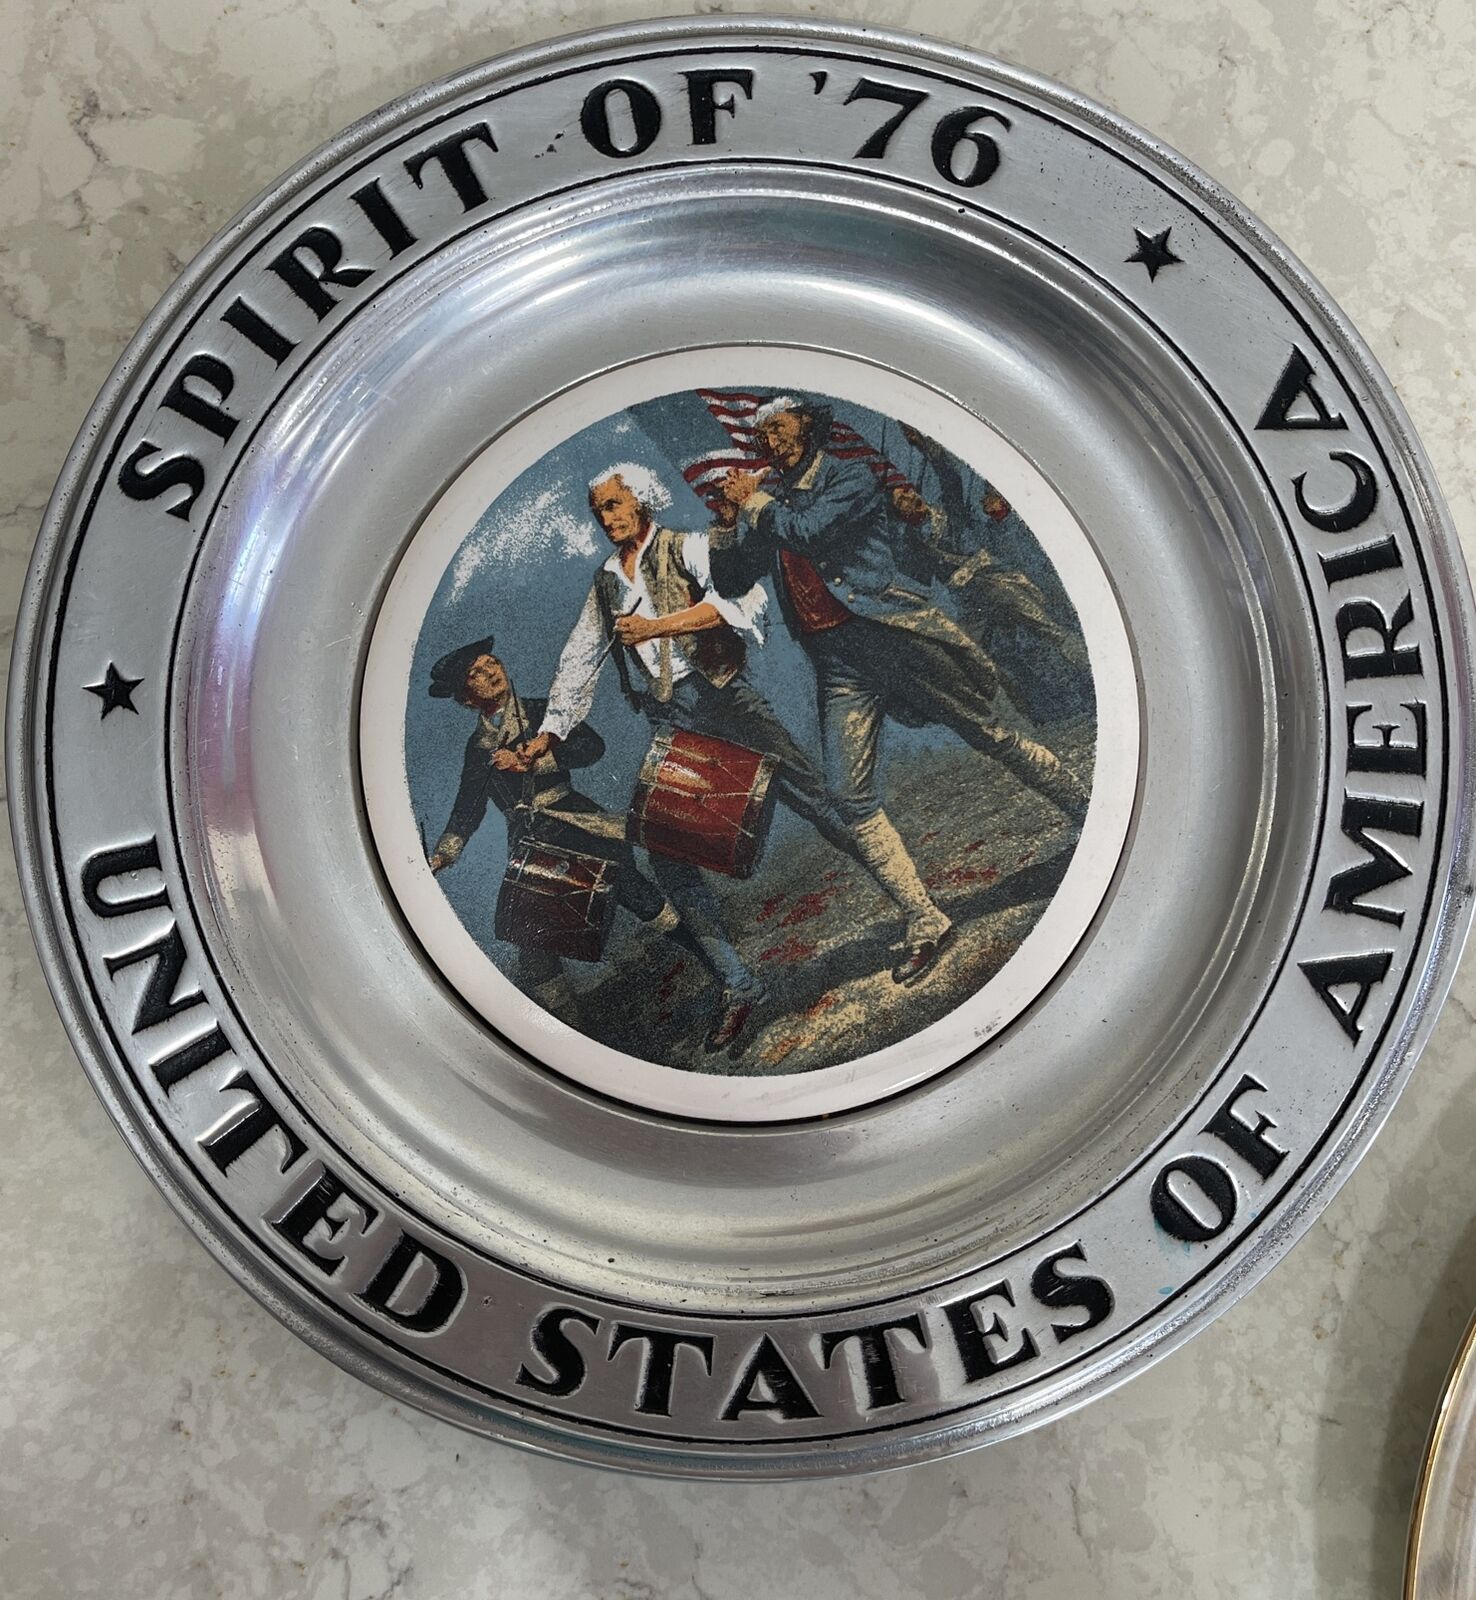 Pewter decorative plates 10.5” Diameter Bicentennial Set Of 2 1976 made USA +Joh